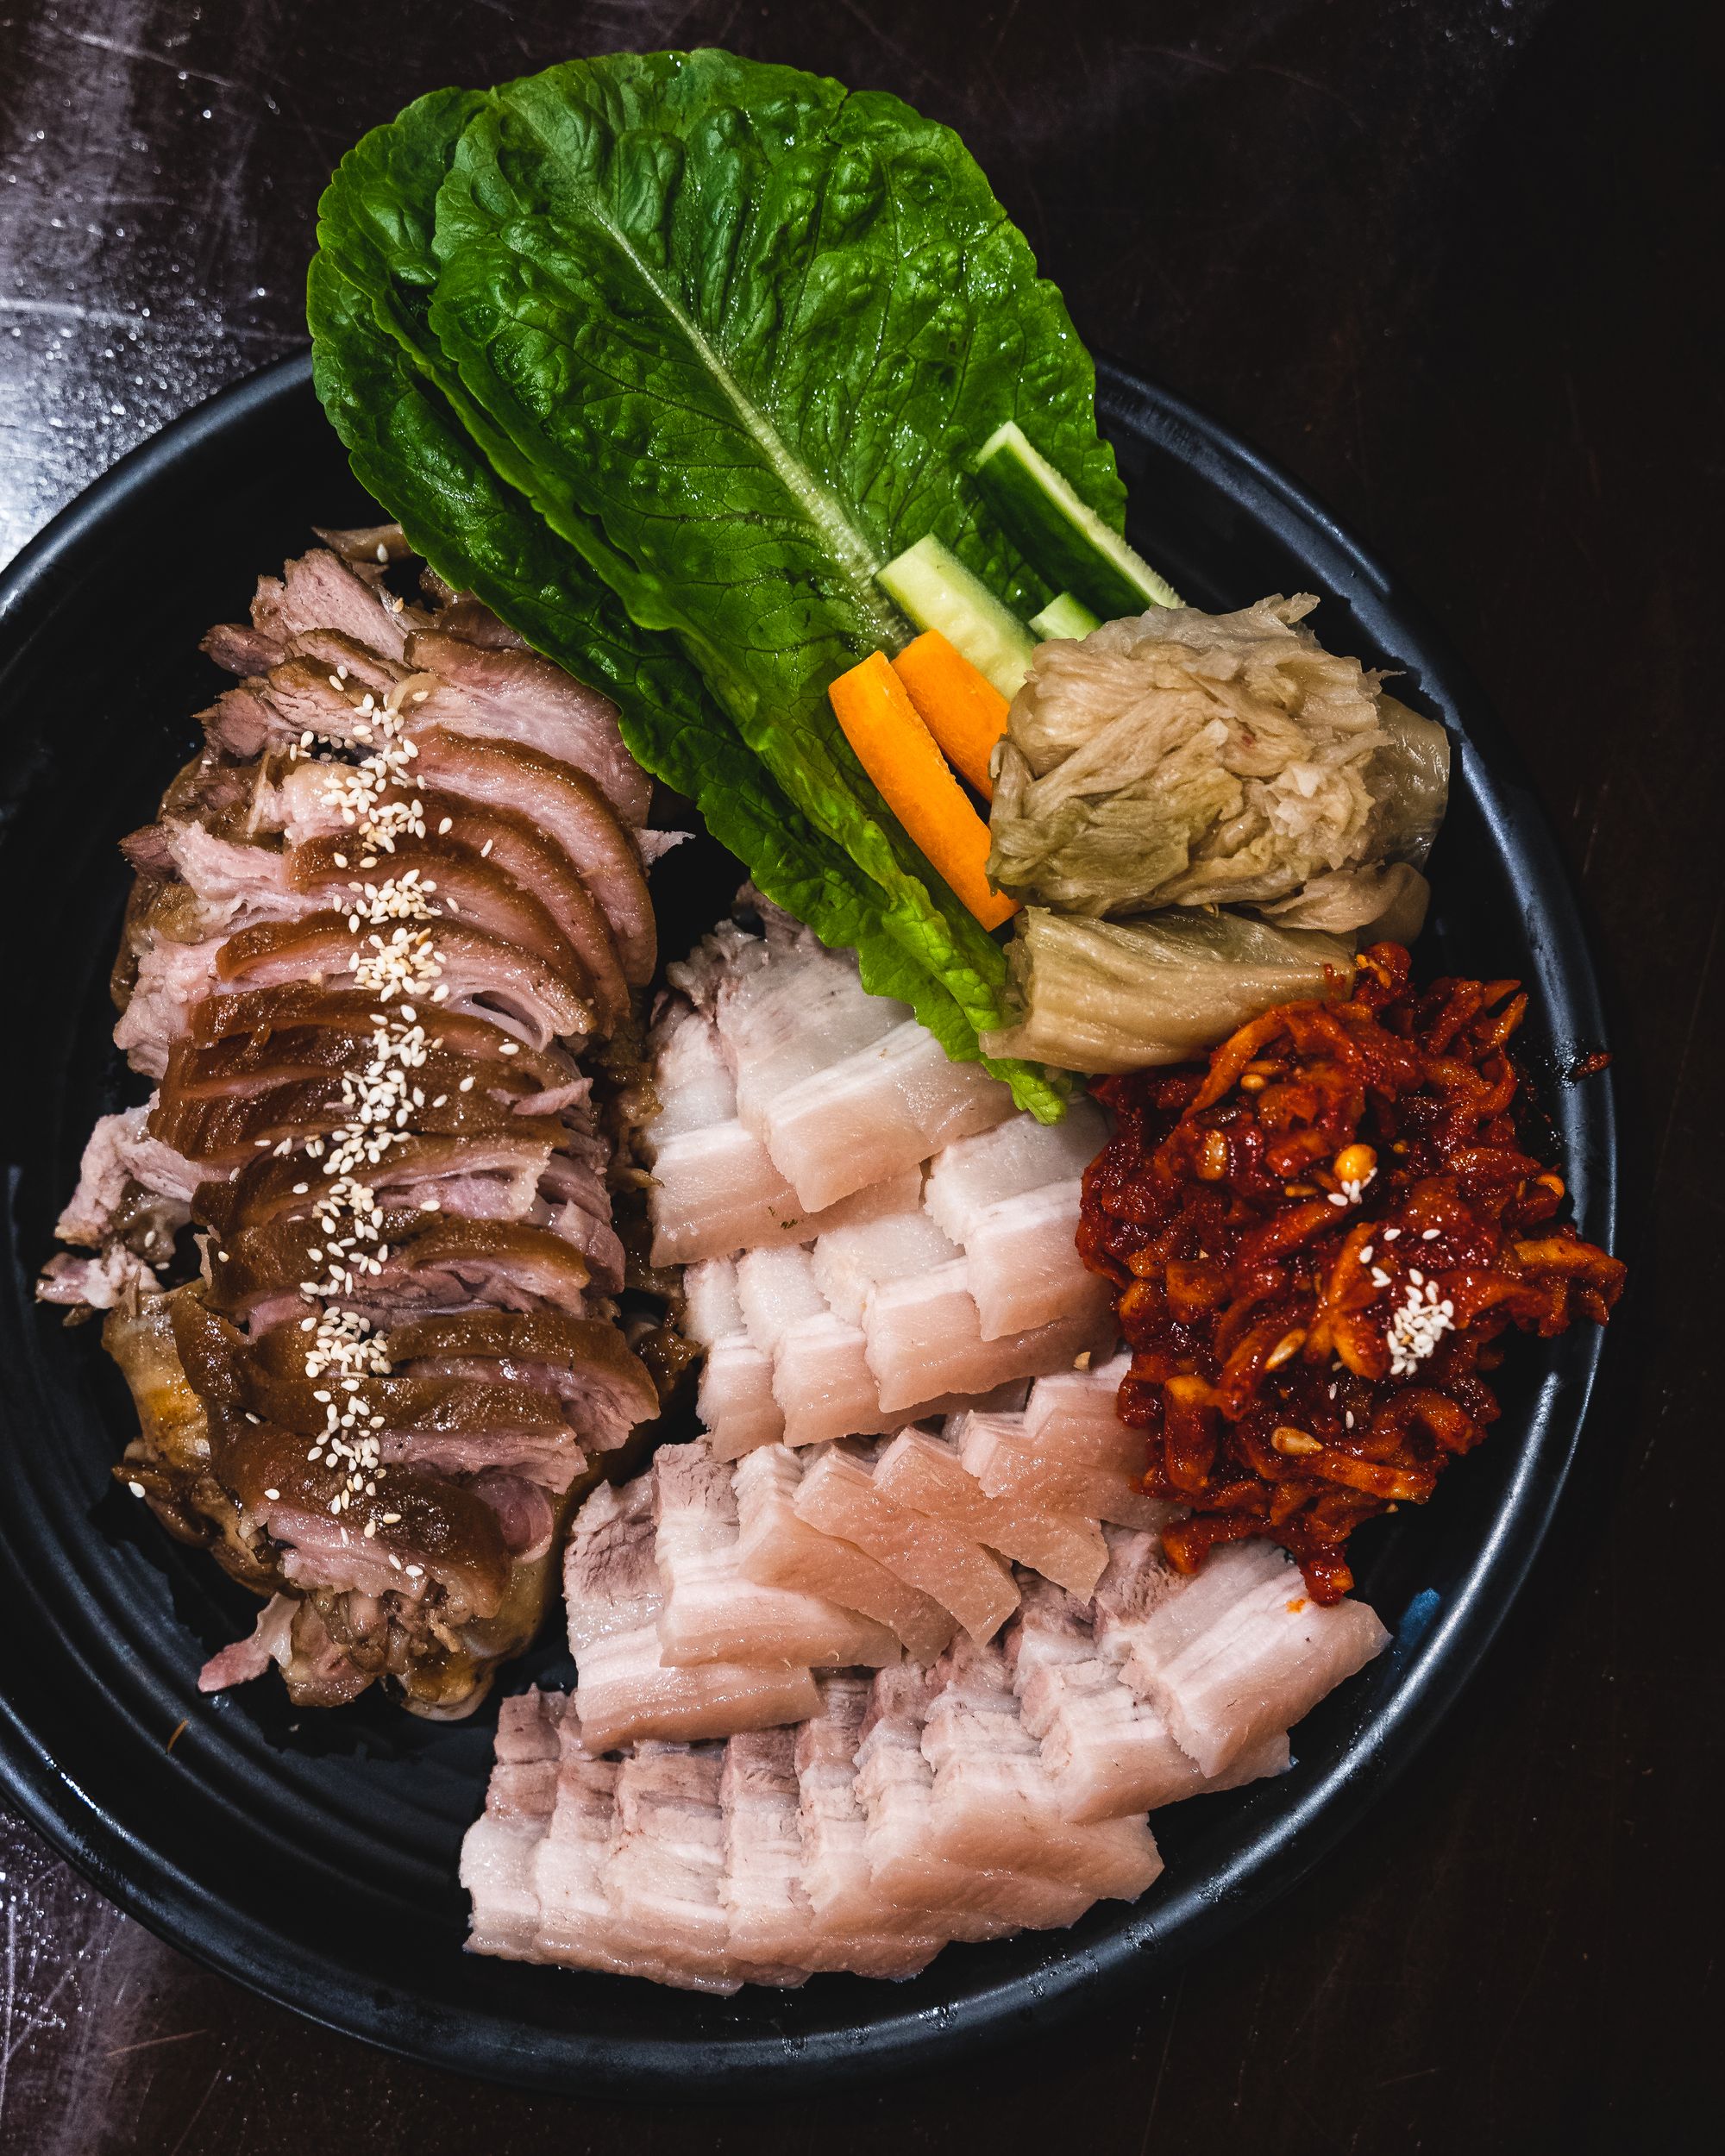 Overhead shot of a pork belly platter, with vegetables